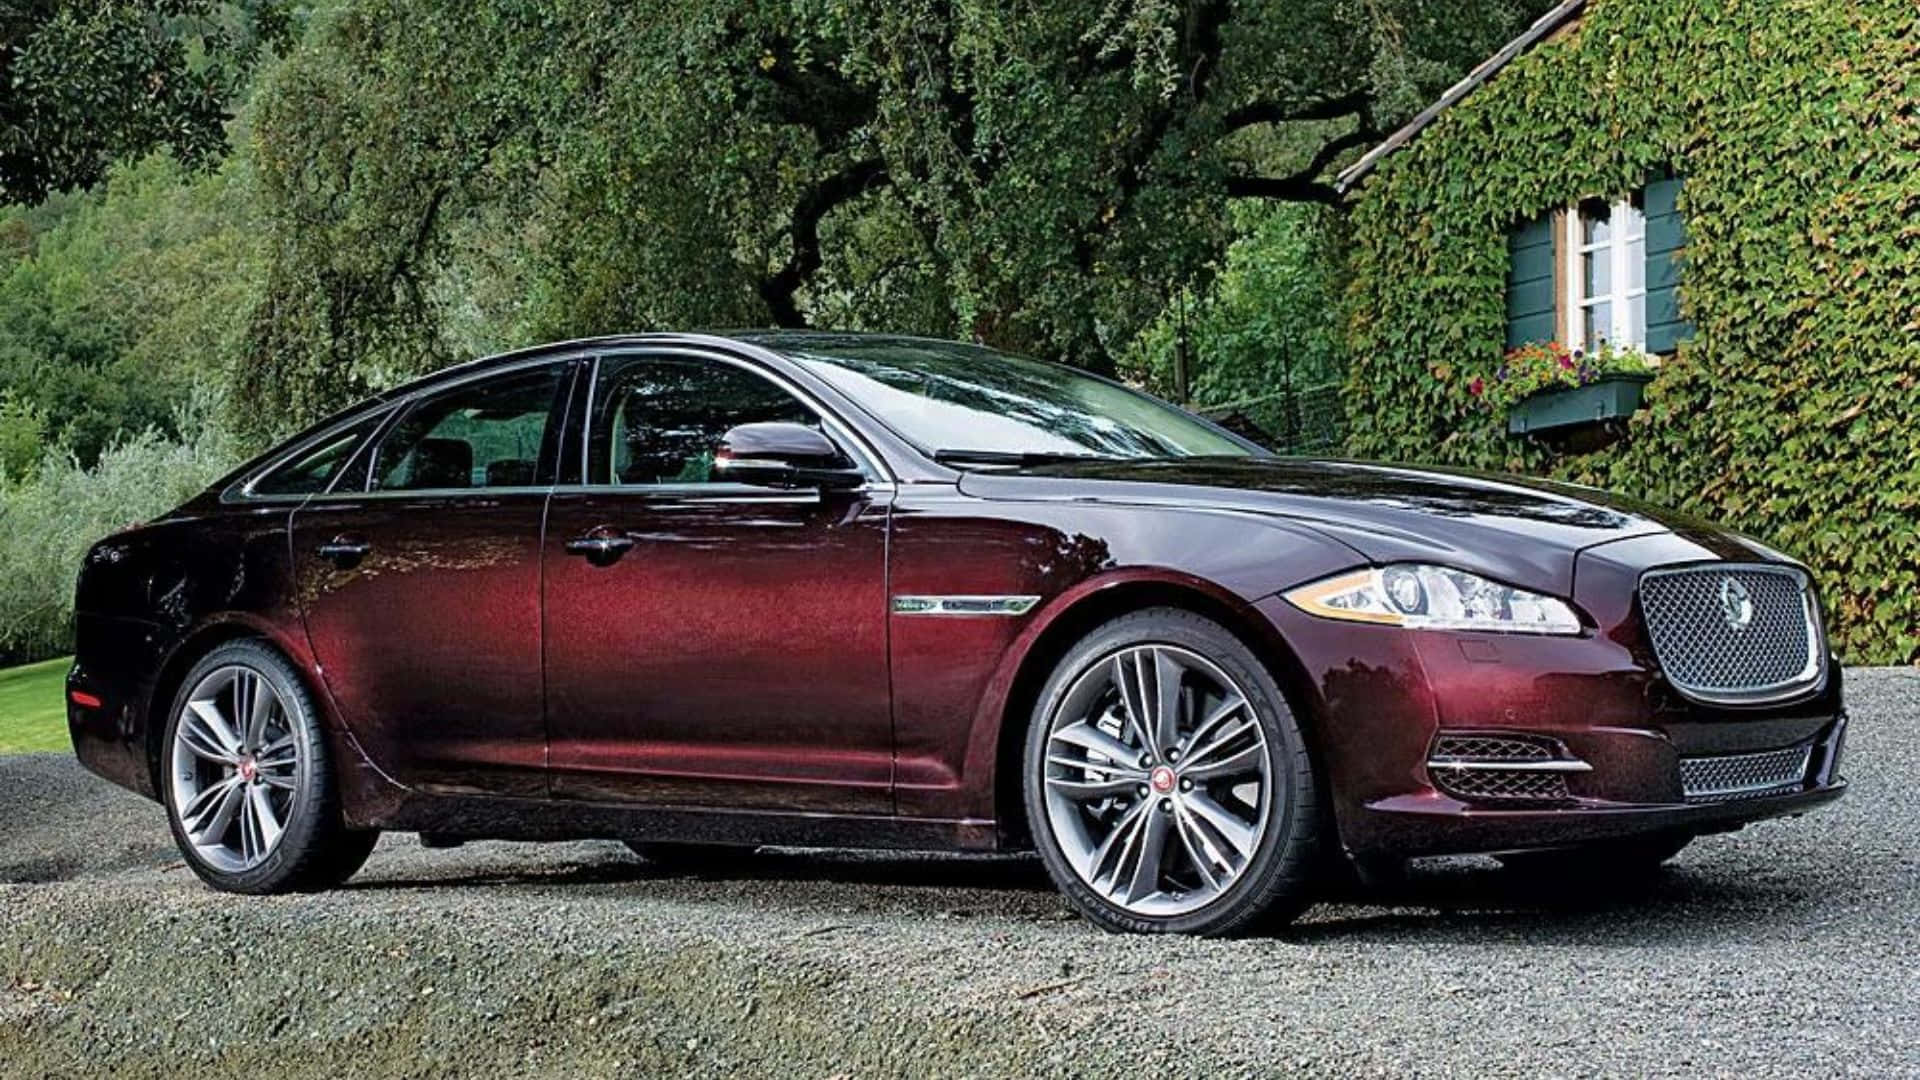 Caption: Powerful Performance And Luxury - The Jaguar Xj Wallpaper